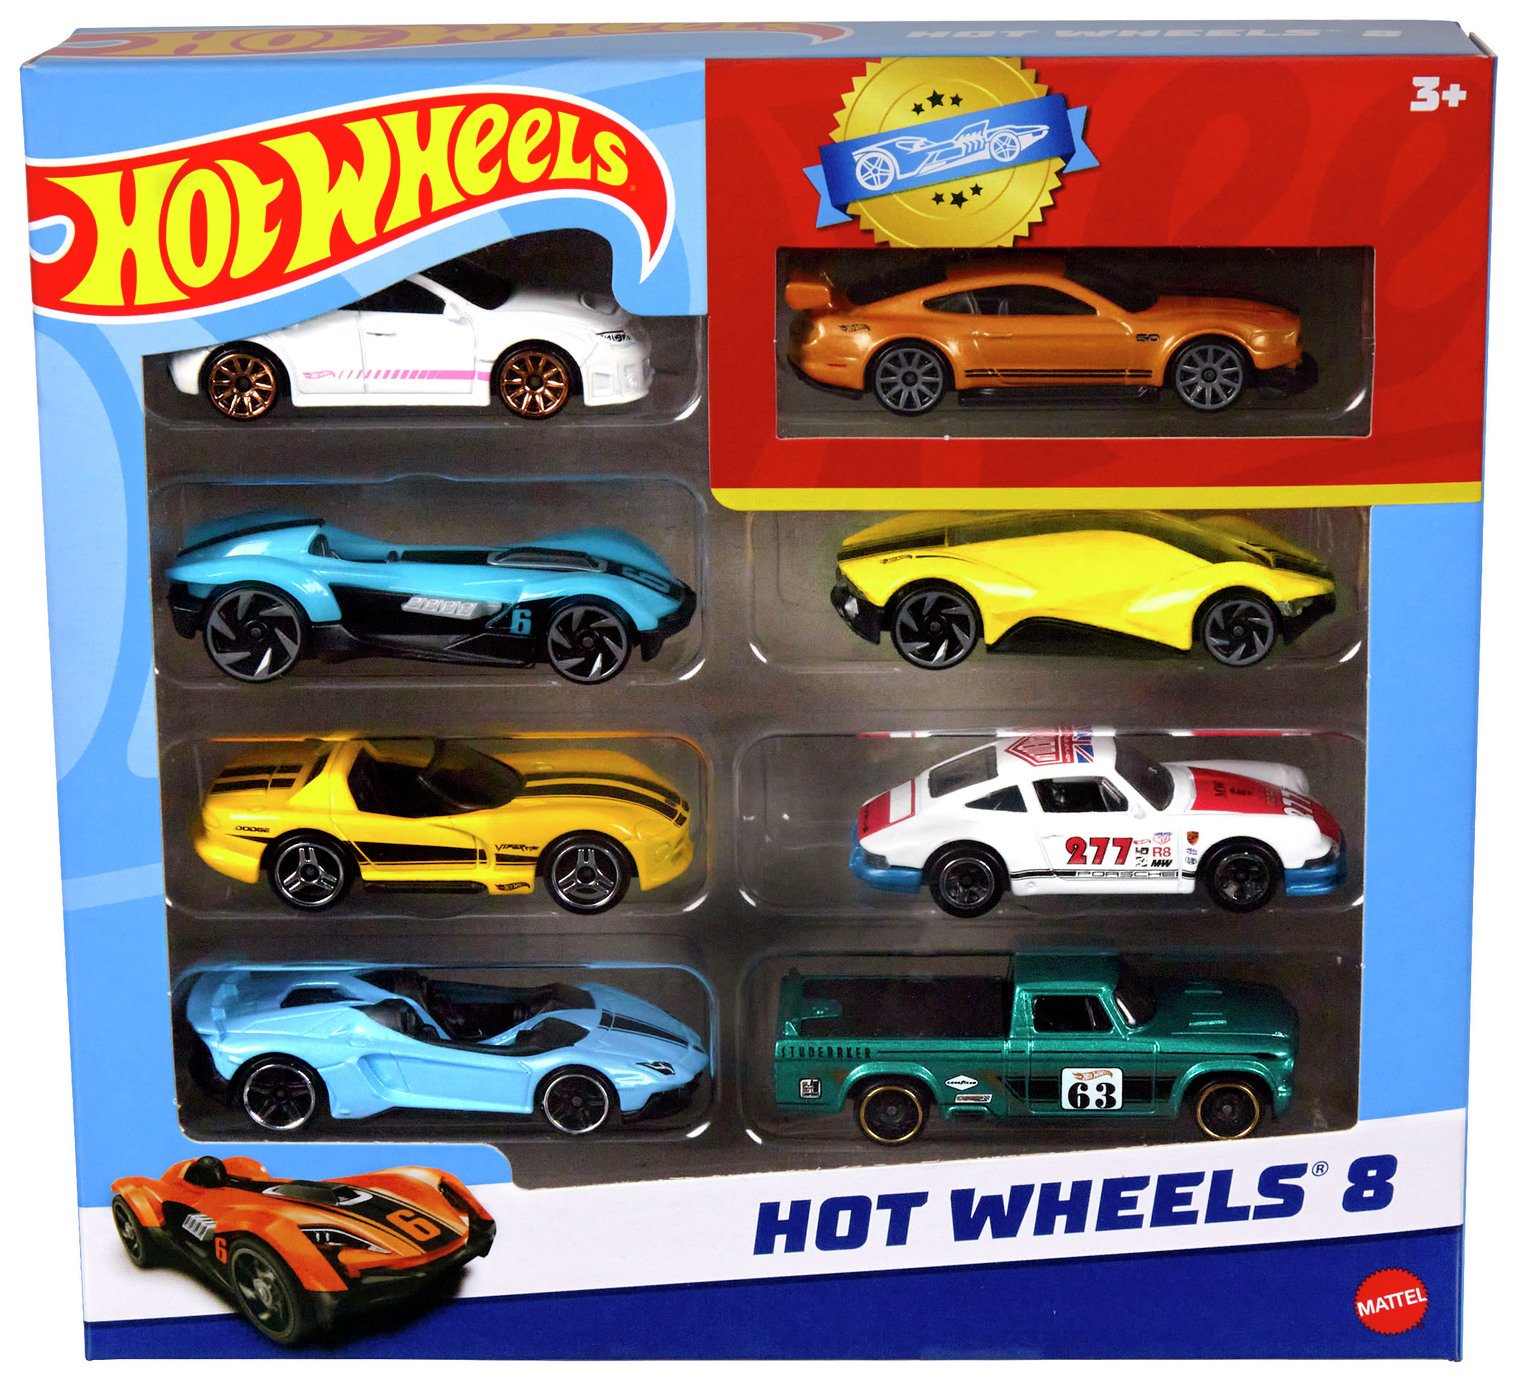 Hot Wheels Car Assortment - Pack of 8